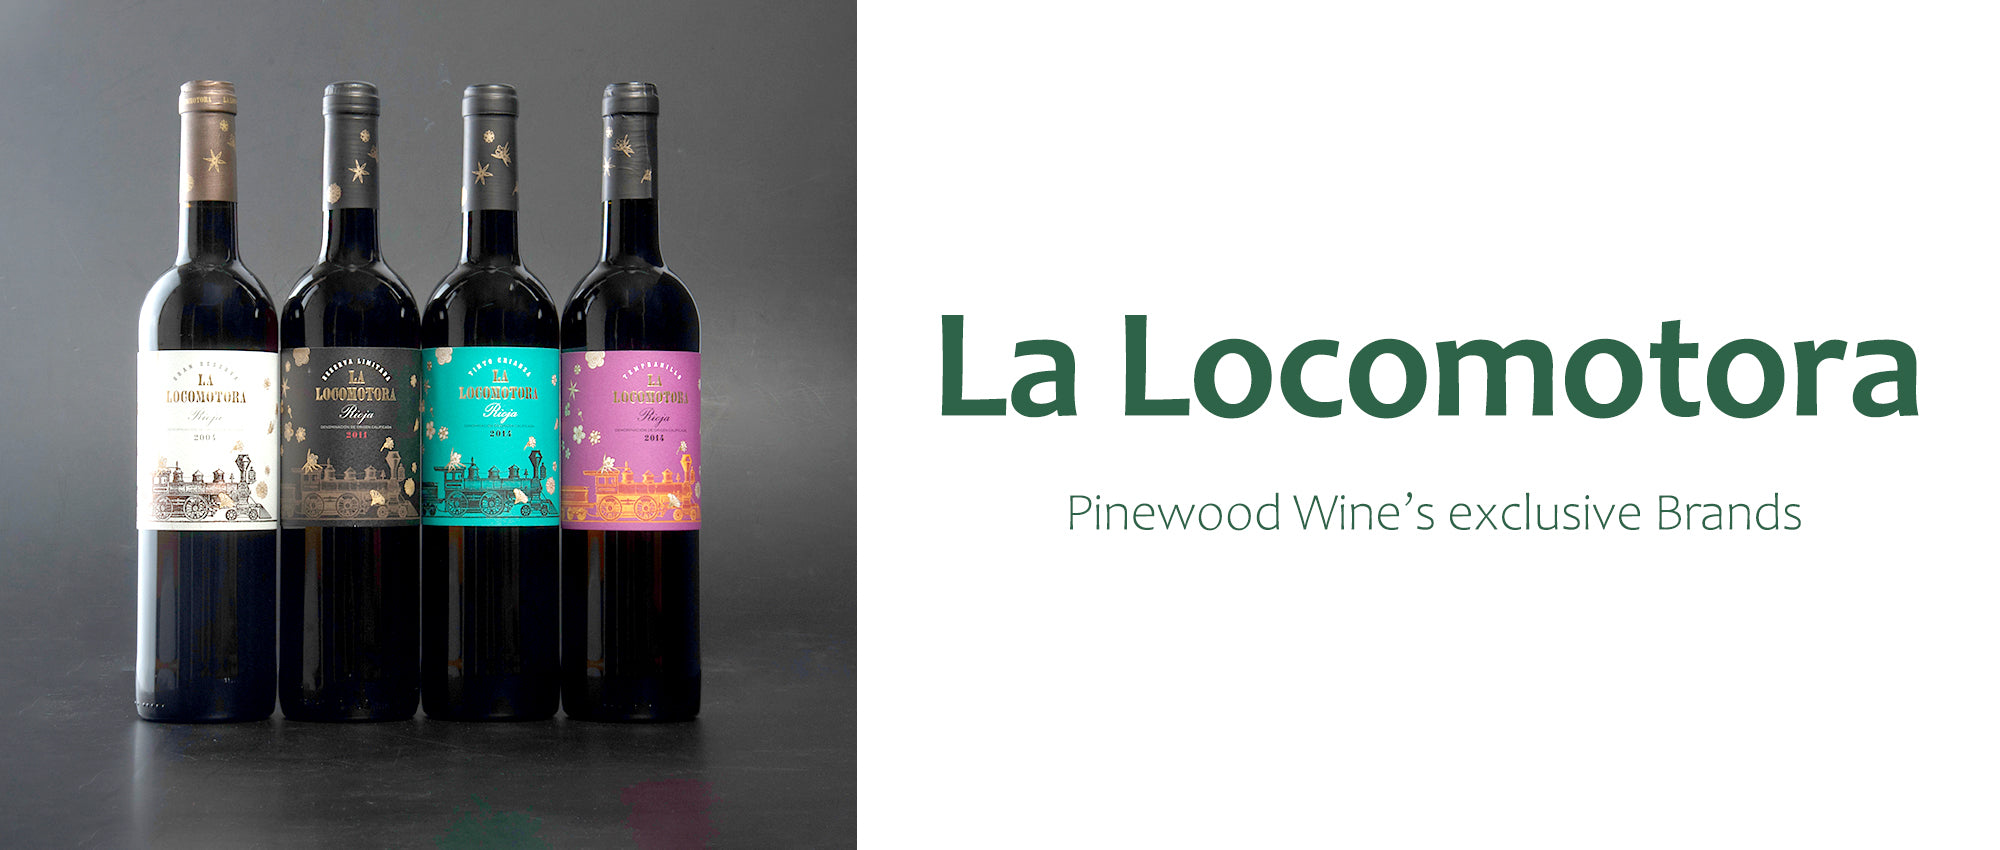 Pinewood Wine: La Locomotora